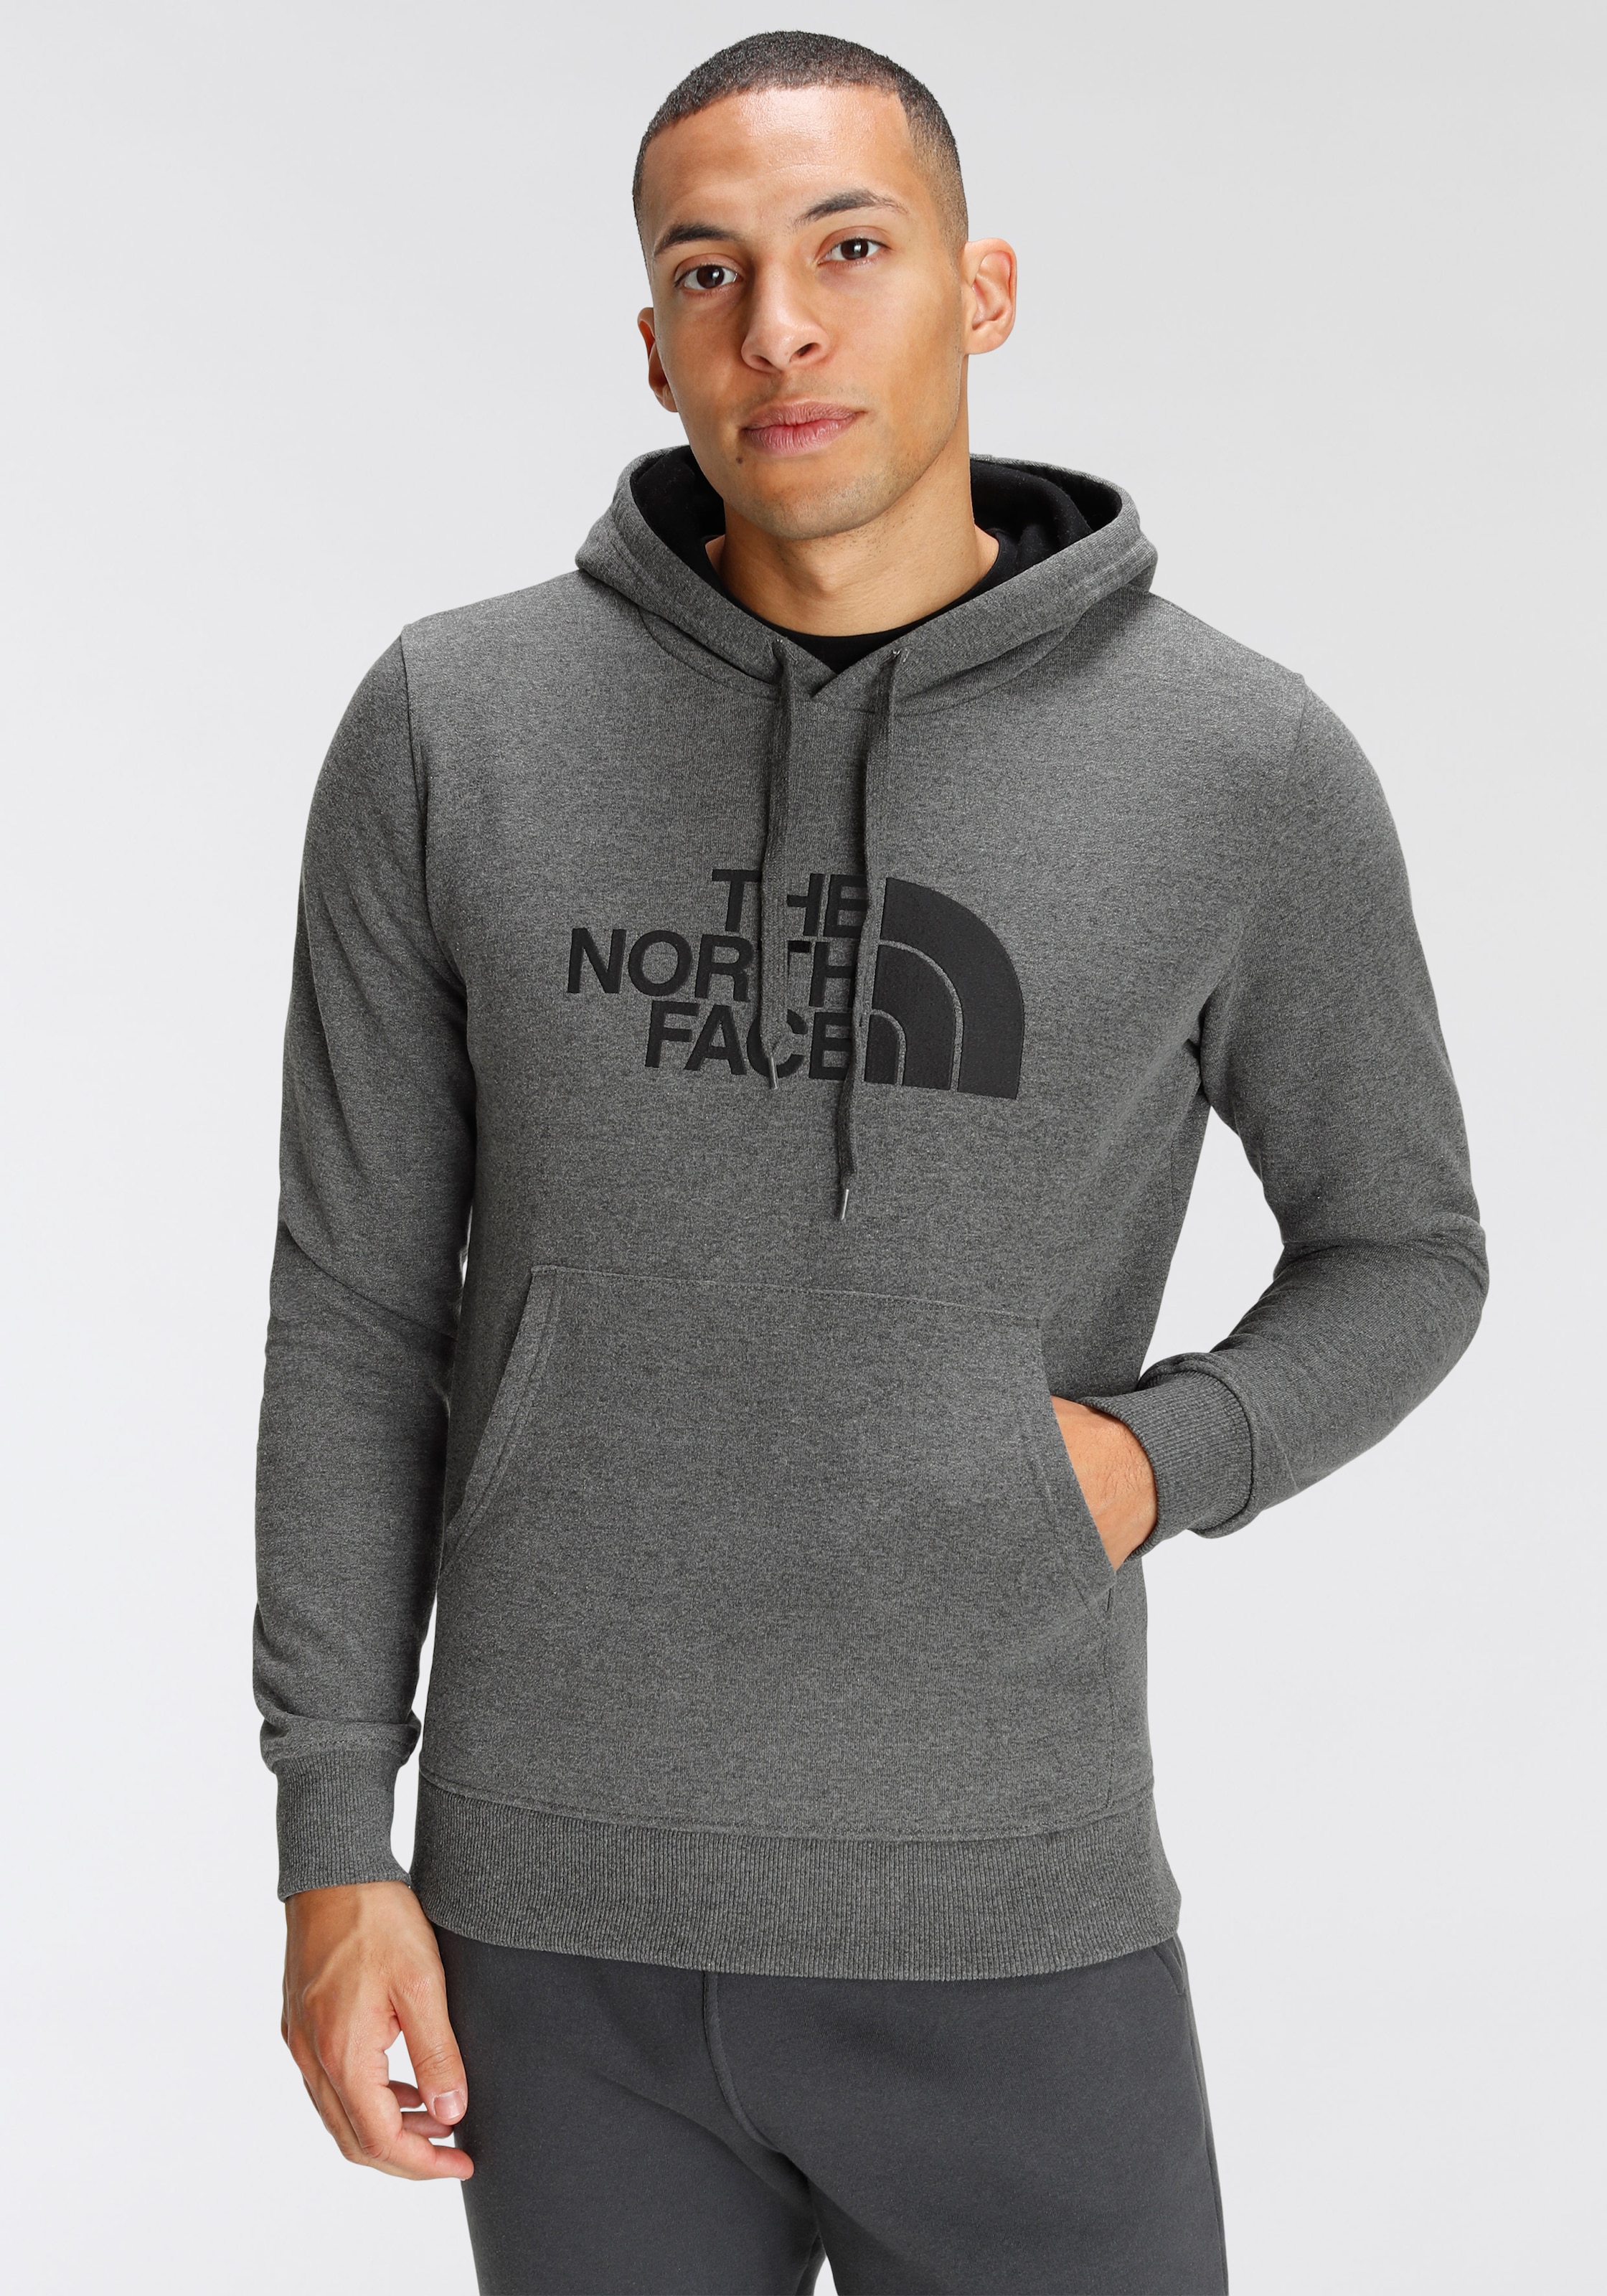 The North Face Kapuzenpullover »DREW PEAK« online shoppen bei OTTO